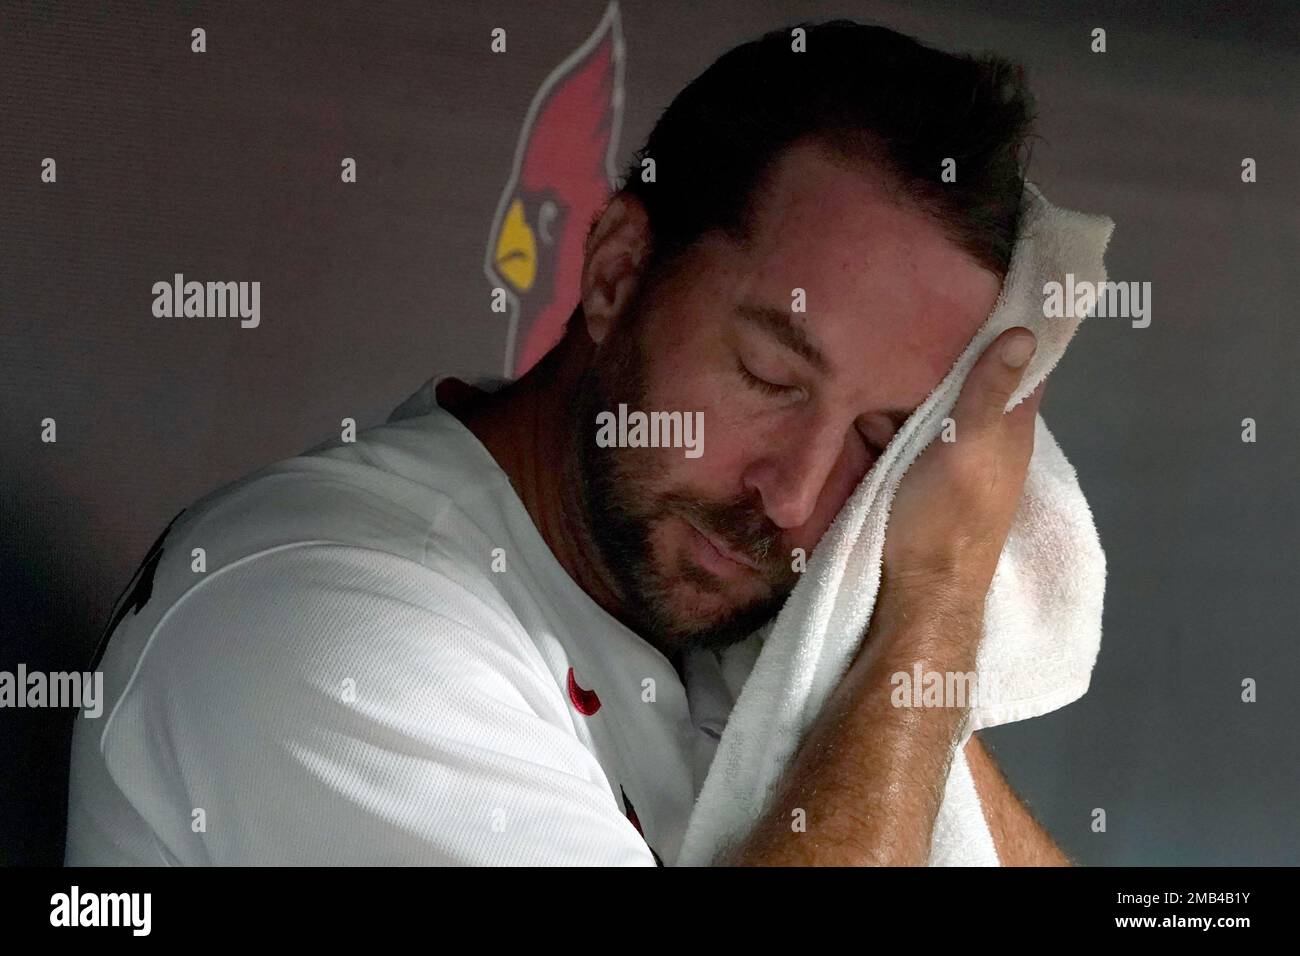 St. Louis Cardinals starting pitcher Adam Wainwright wipes his